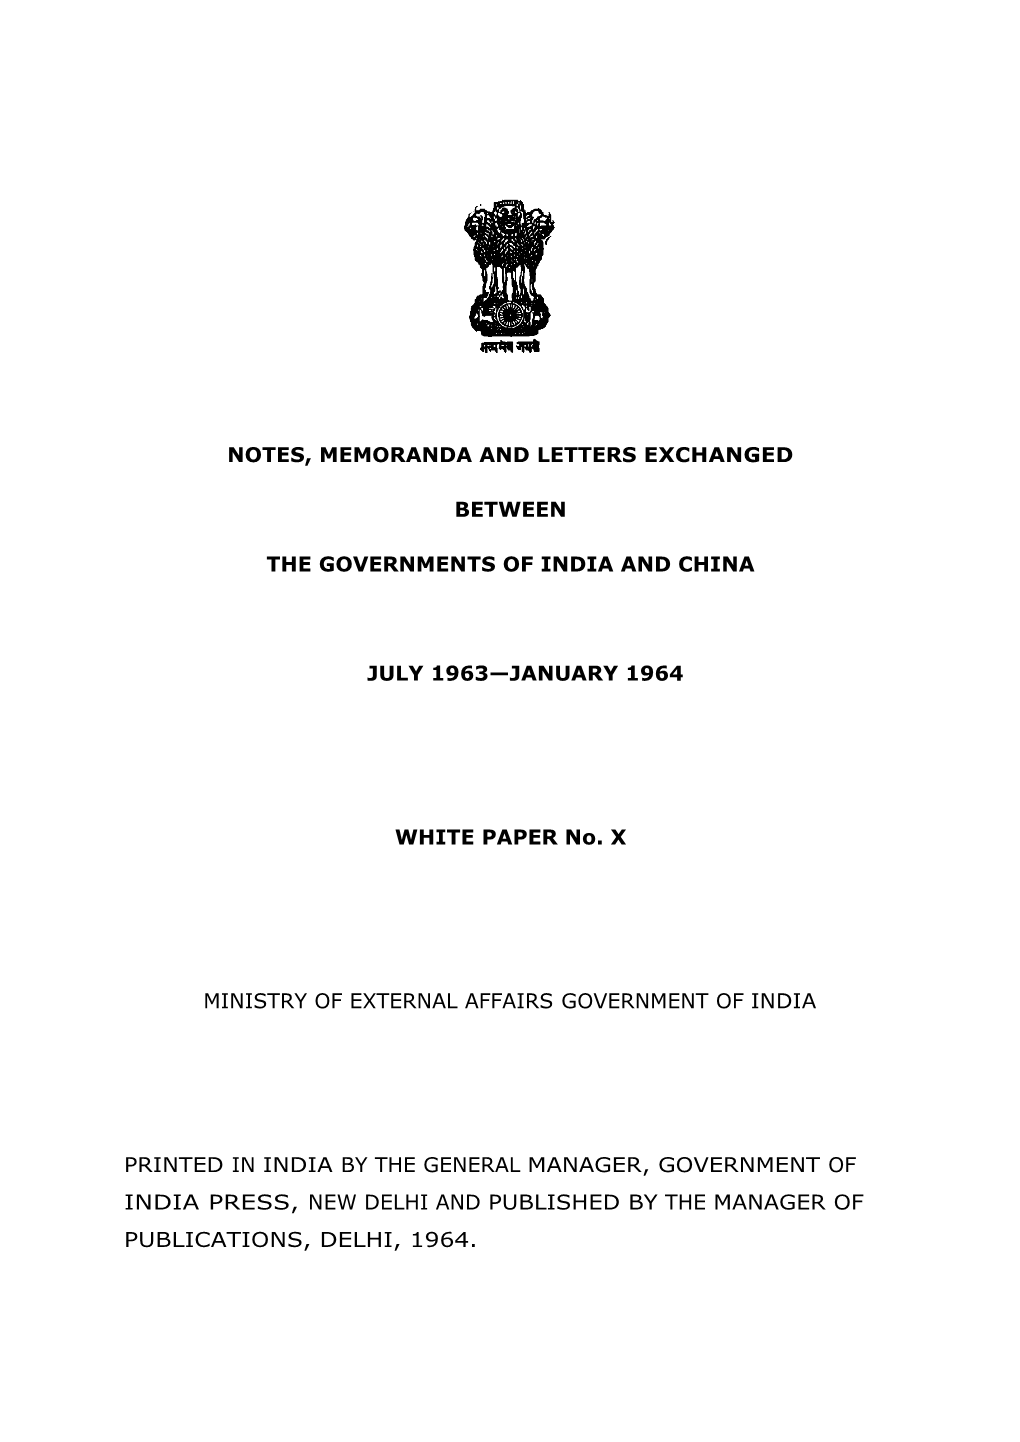 White Paper 10 (July 1963 – January 1964)